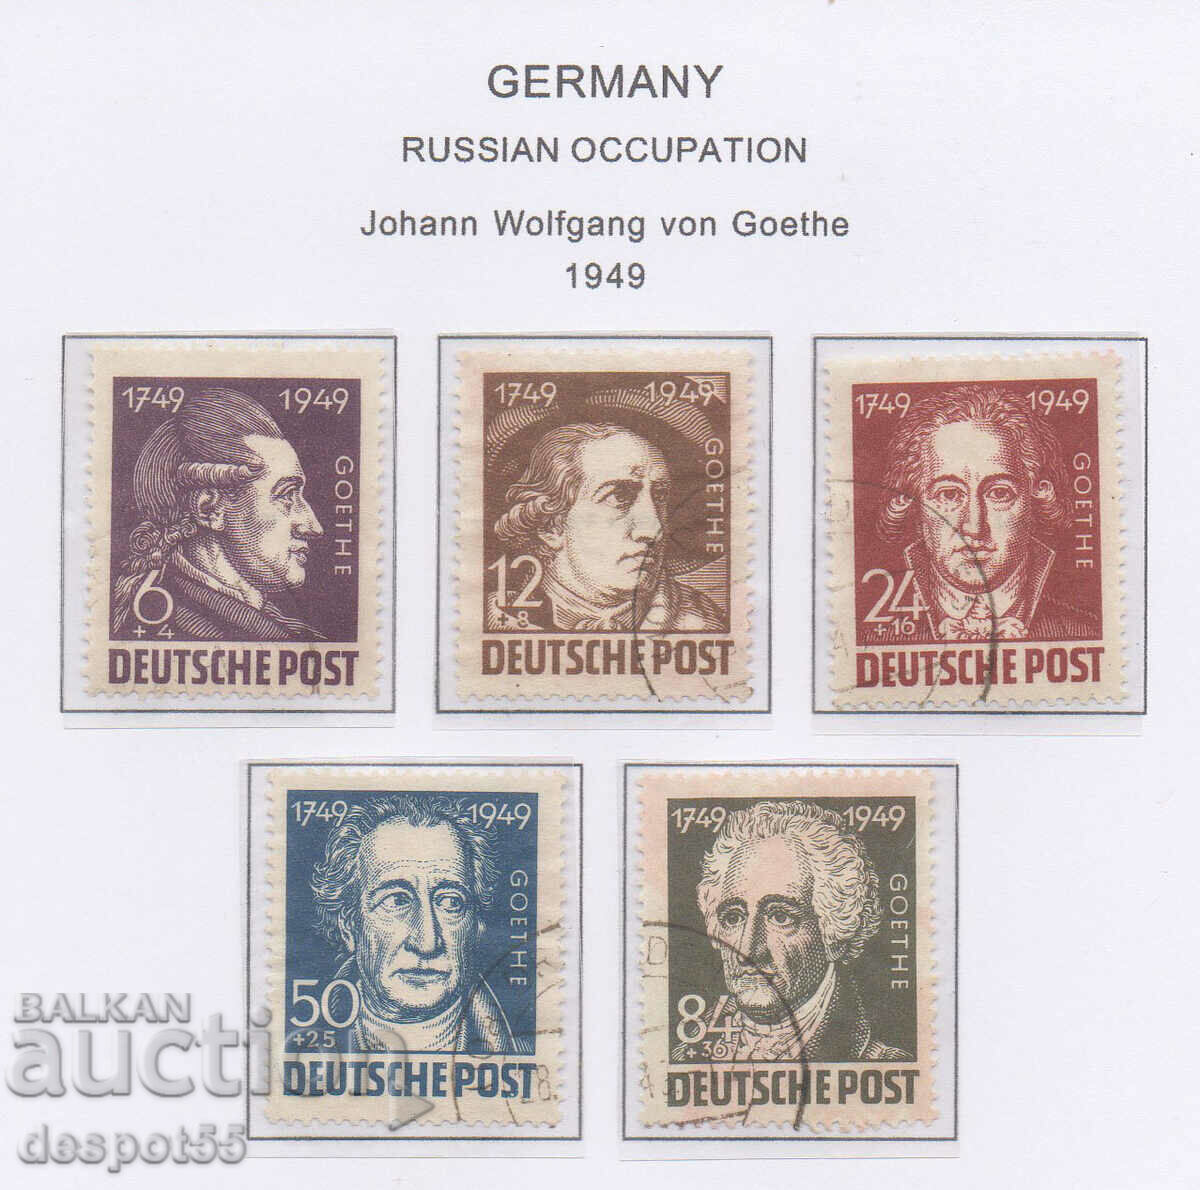 1949. Germany. Occupation - Russian. Johann Wolfgang Goethe.